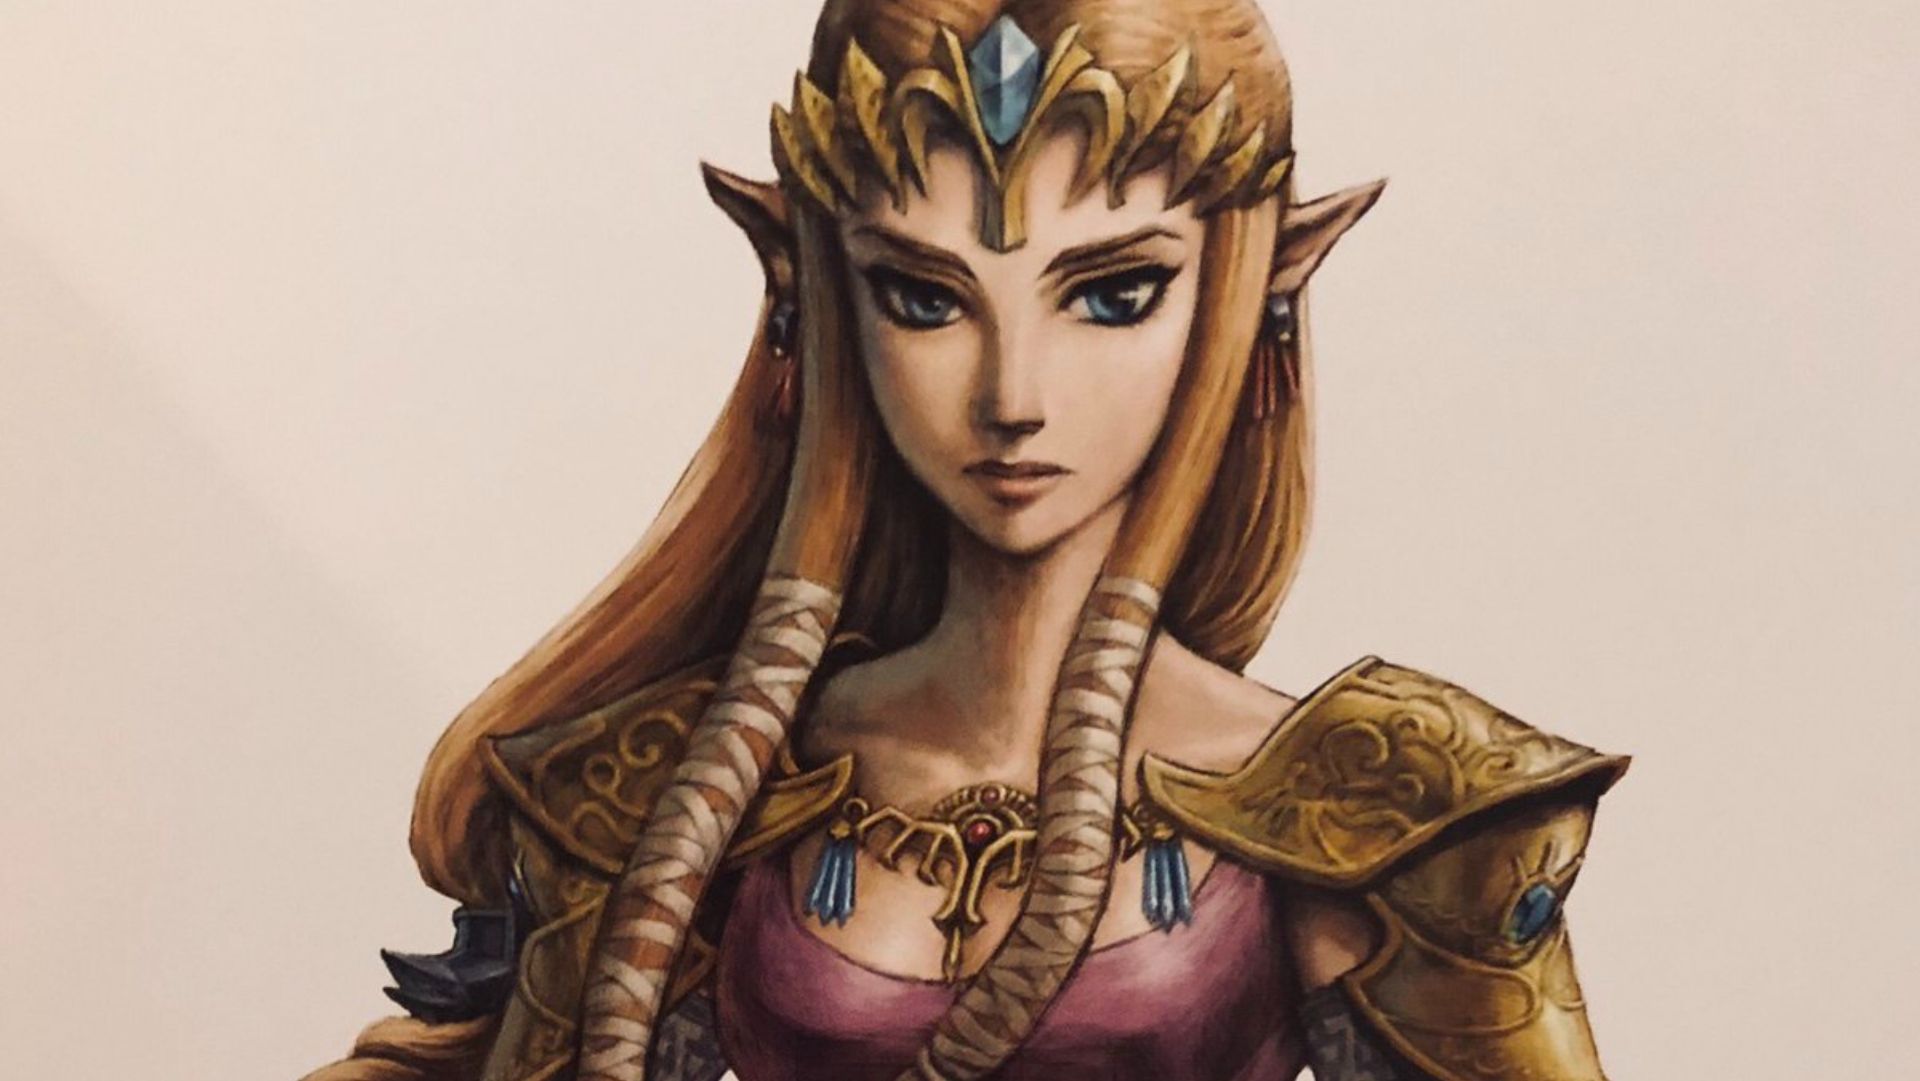 Official art of Princess Zelda from The Legend of Zelda: Twilight Princess.